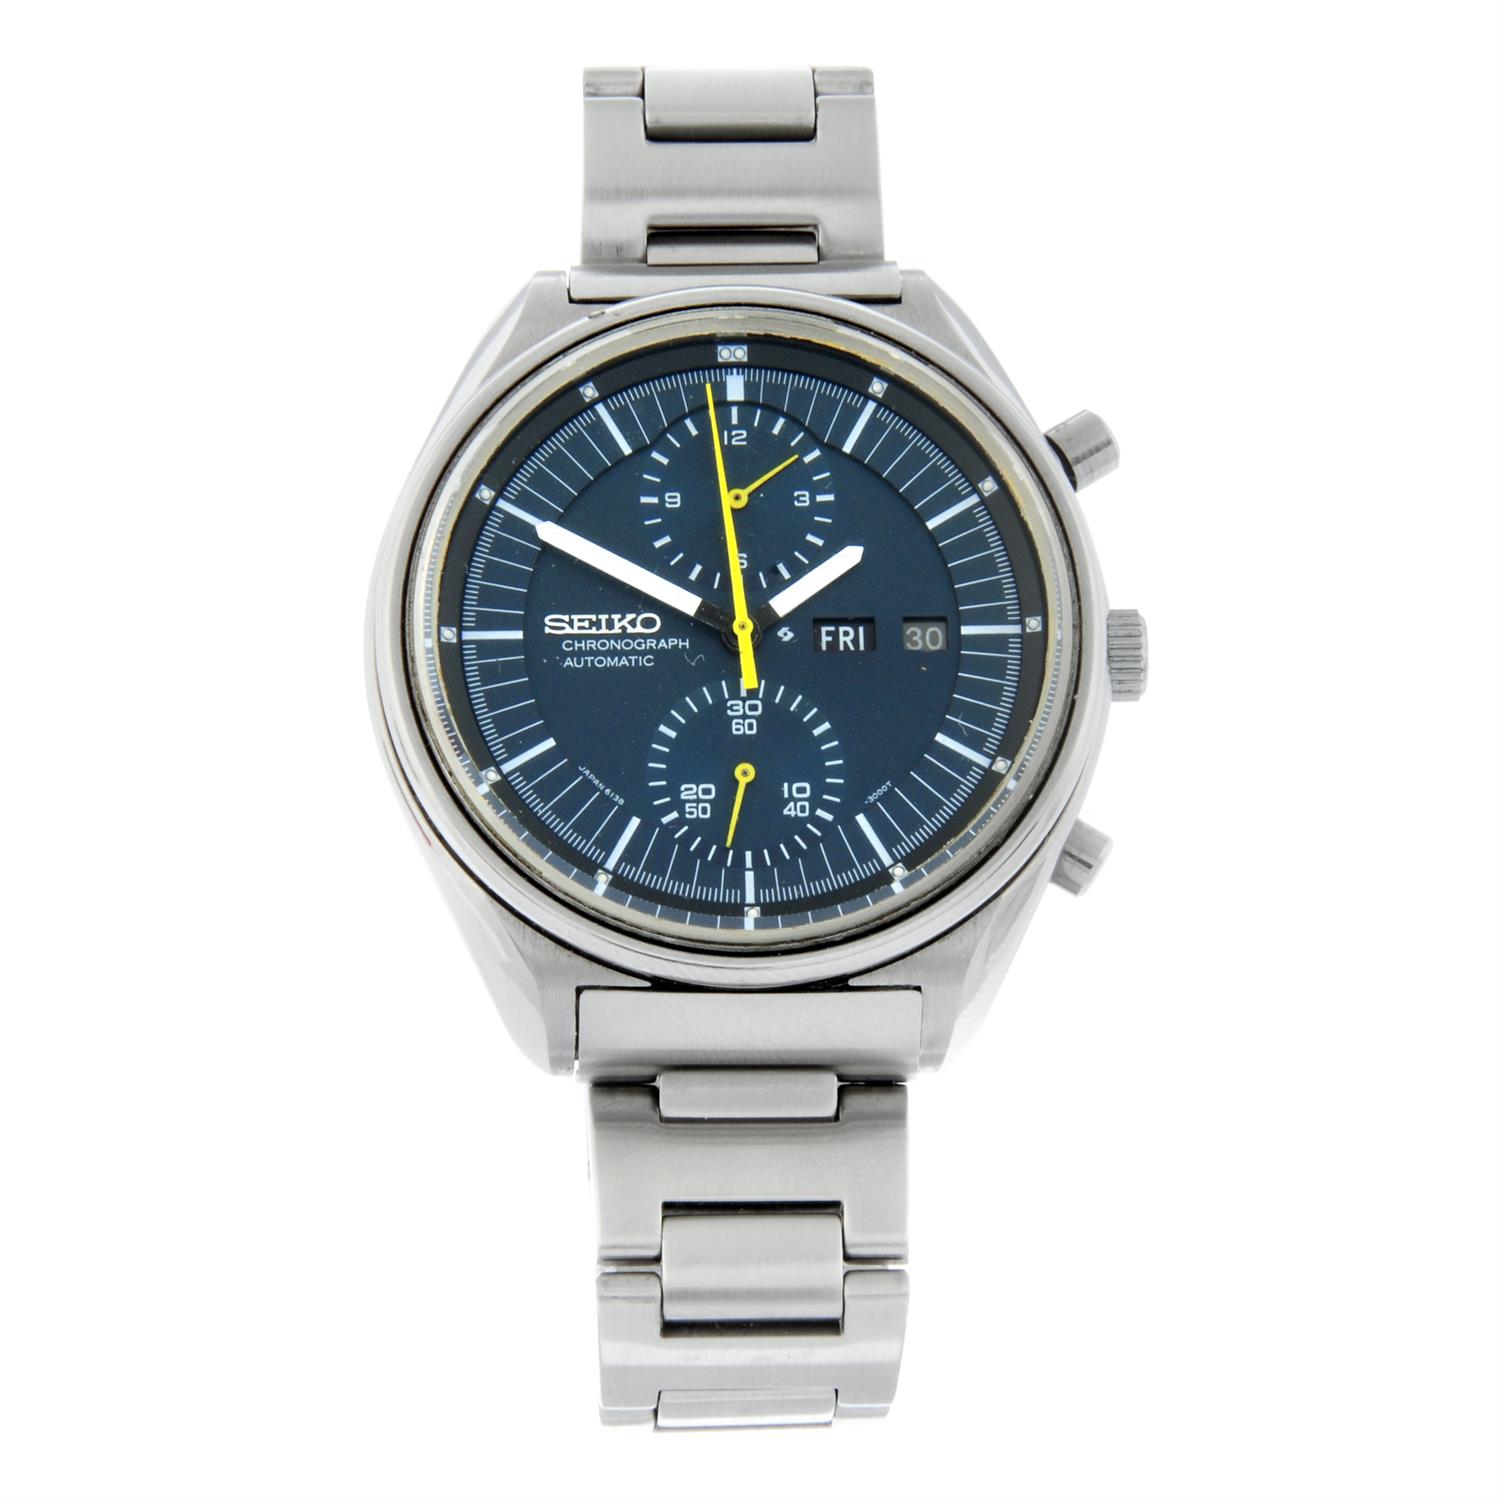 Seiko - a chronograph watch, 42mm.